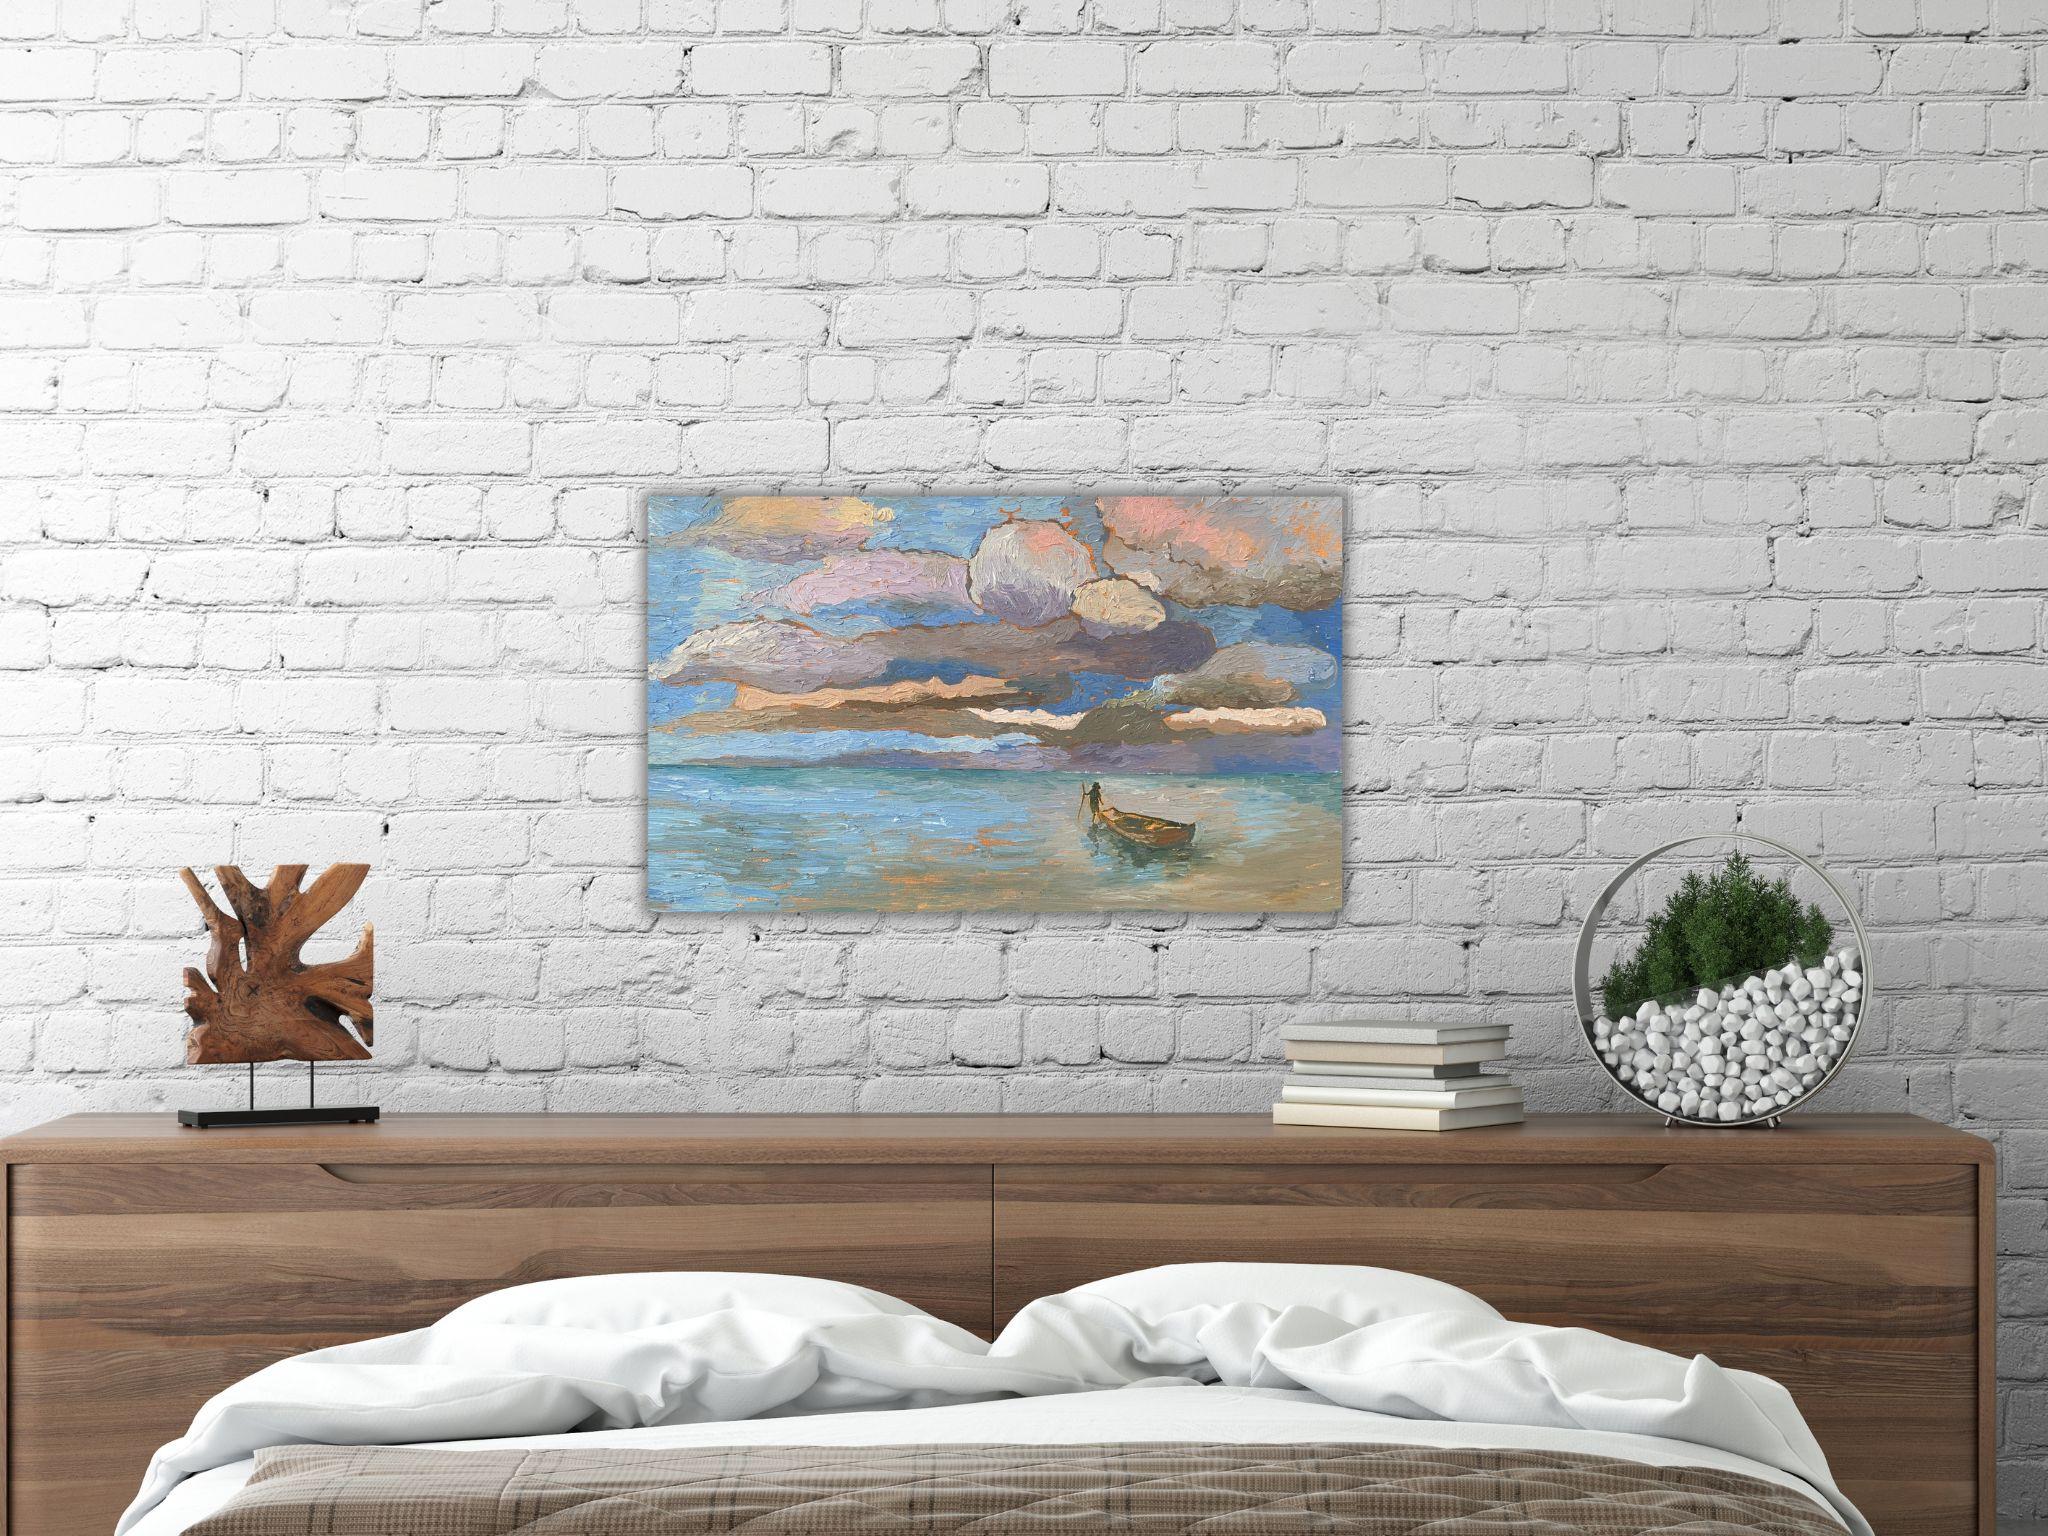 Sky inside me - Impressionist Painting by Dasha Pogodina